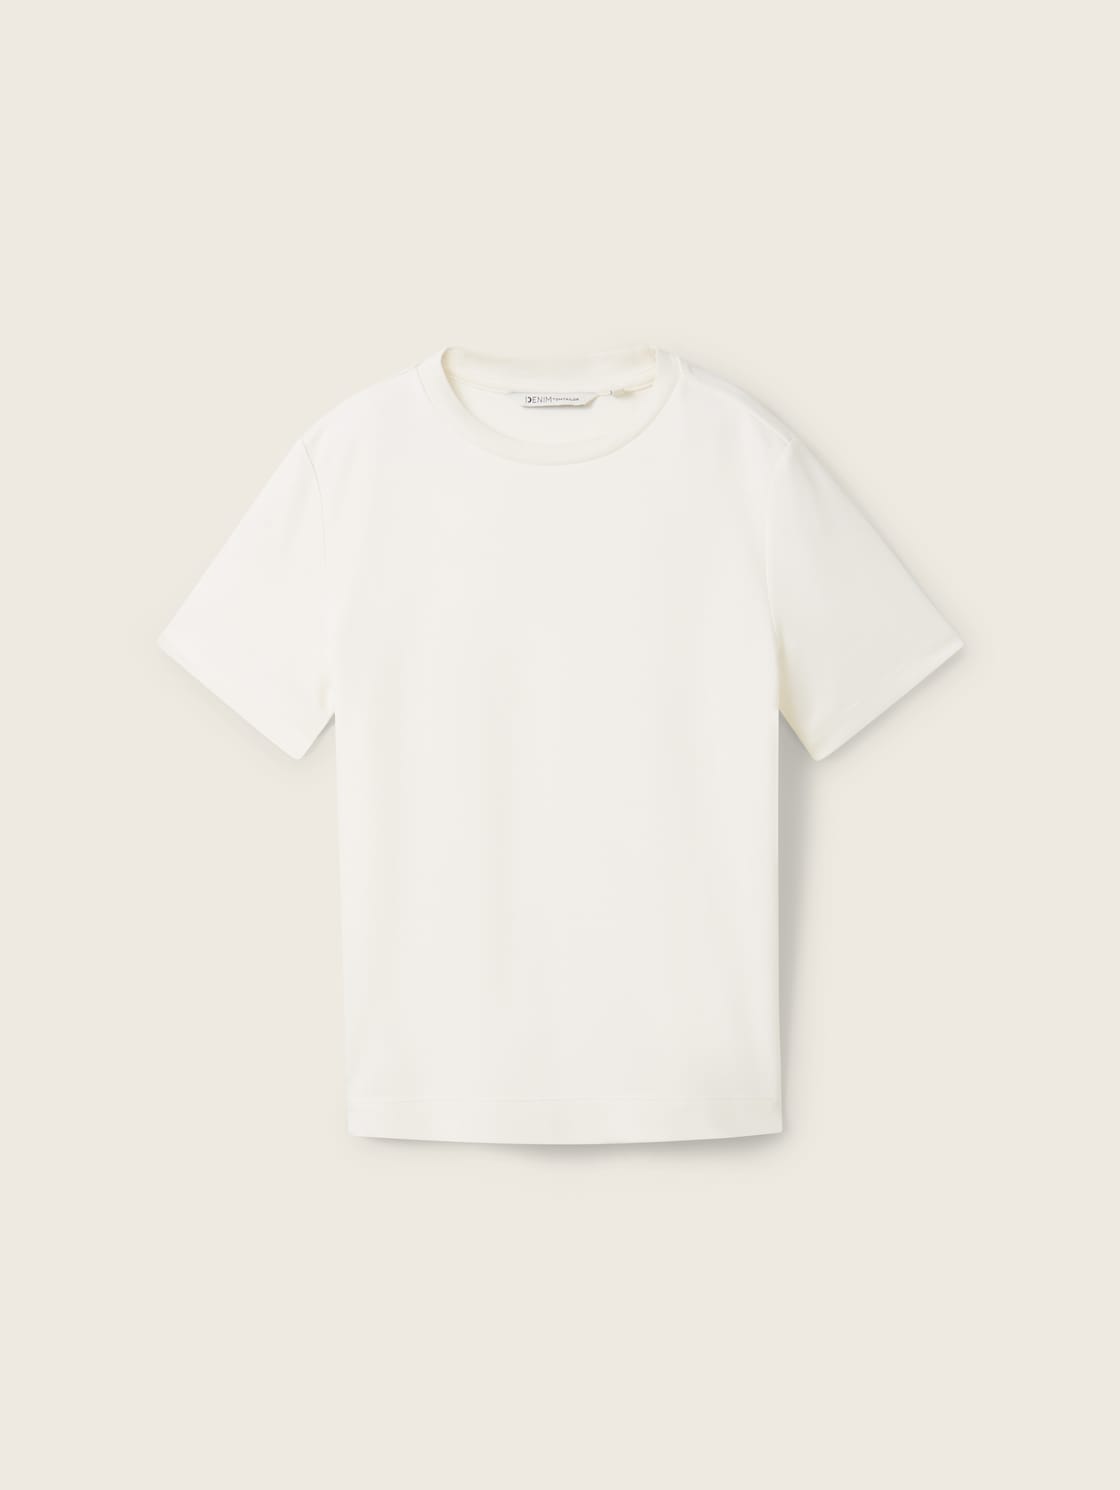 TOM TAILOR DENIM Damen Basic T-Shirt, braun, Uni, Gr. M von Tom Tailor Denim